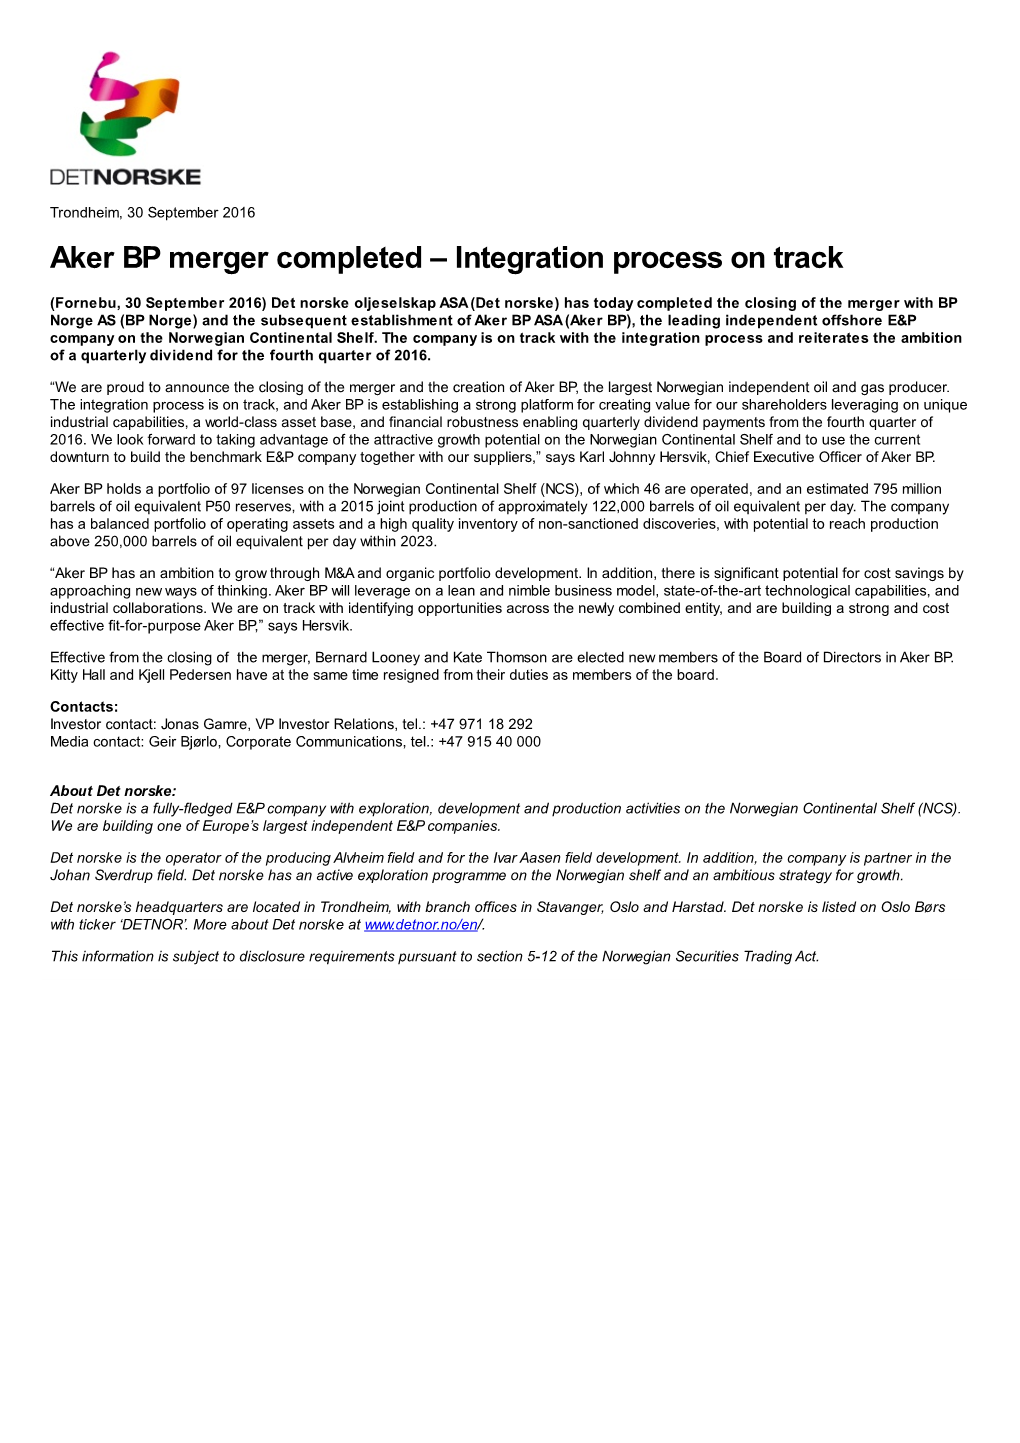 Aker BP Merger Completed – Integration Process on Track